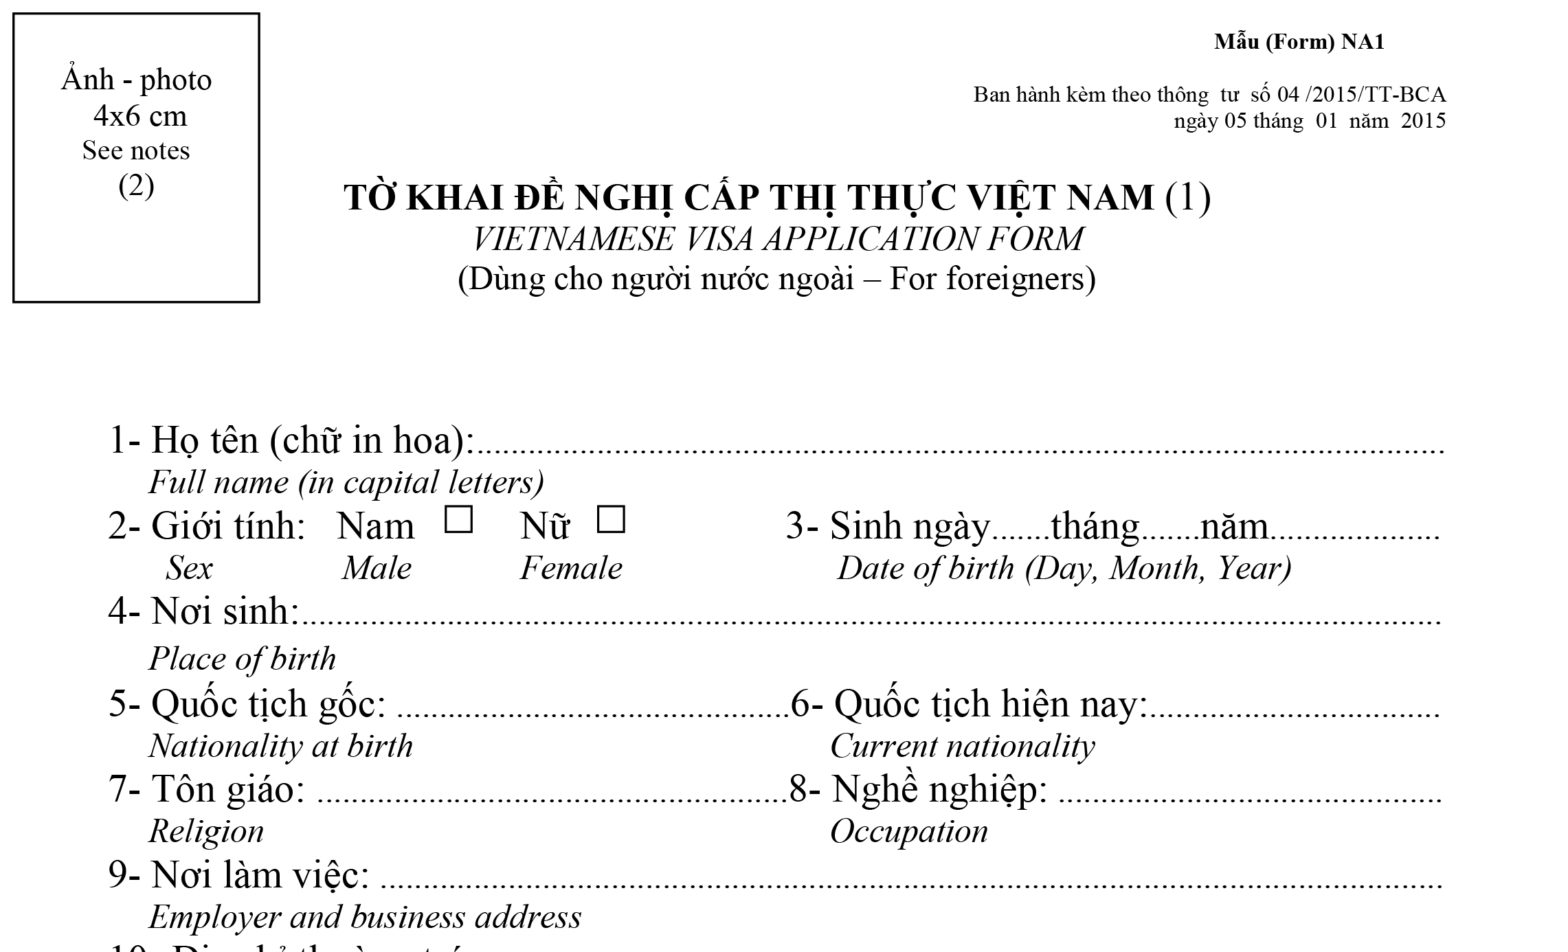 Vietnamese_Visa_application_form_-_NA1